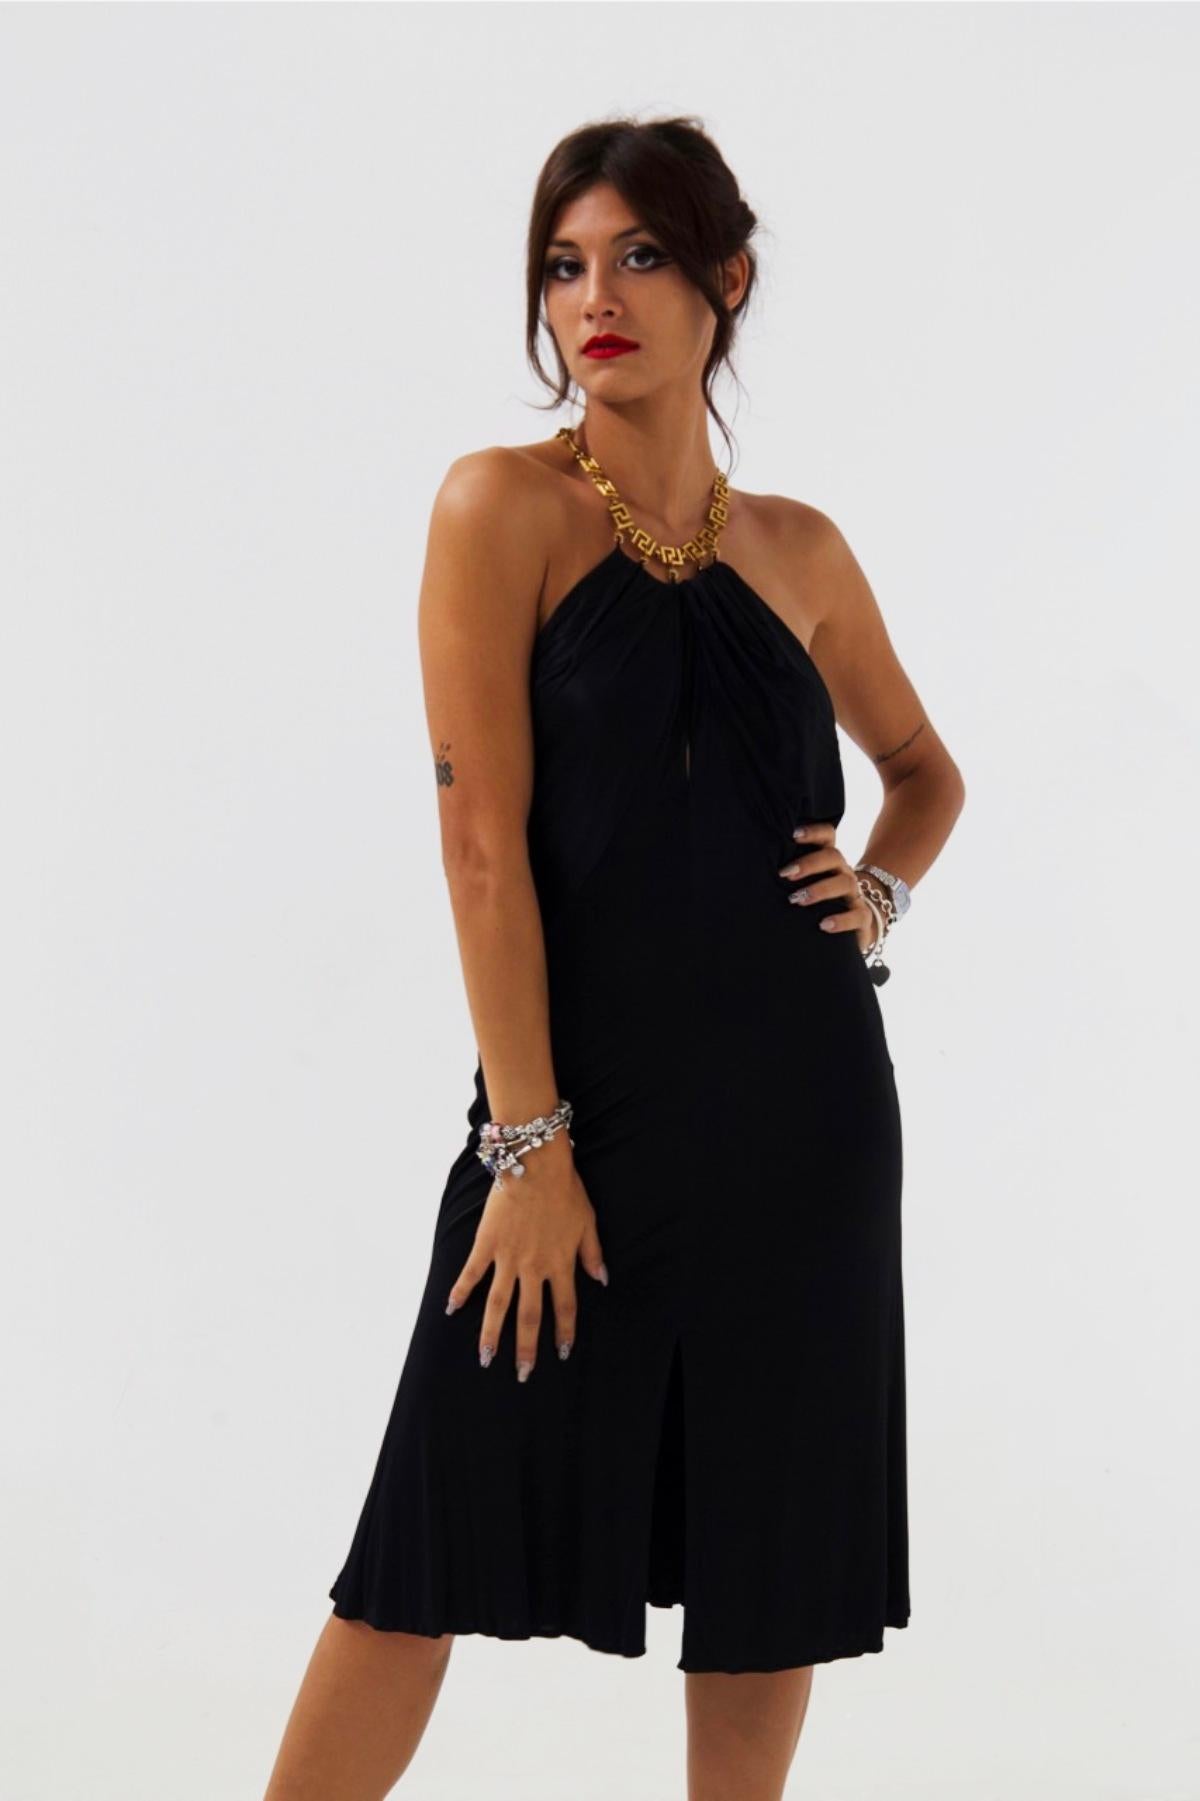 Gianni Versace Black Medusa Evening Dress For Sale 5